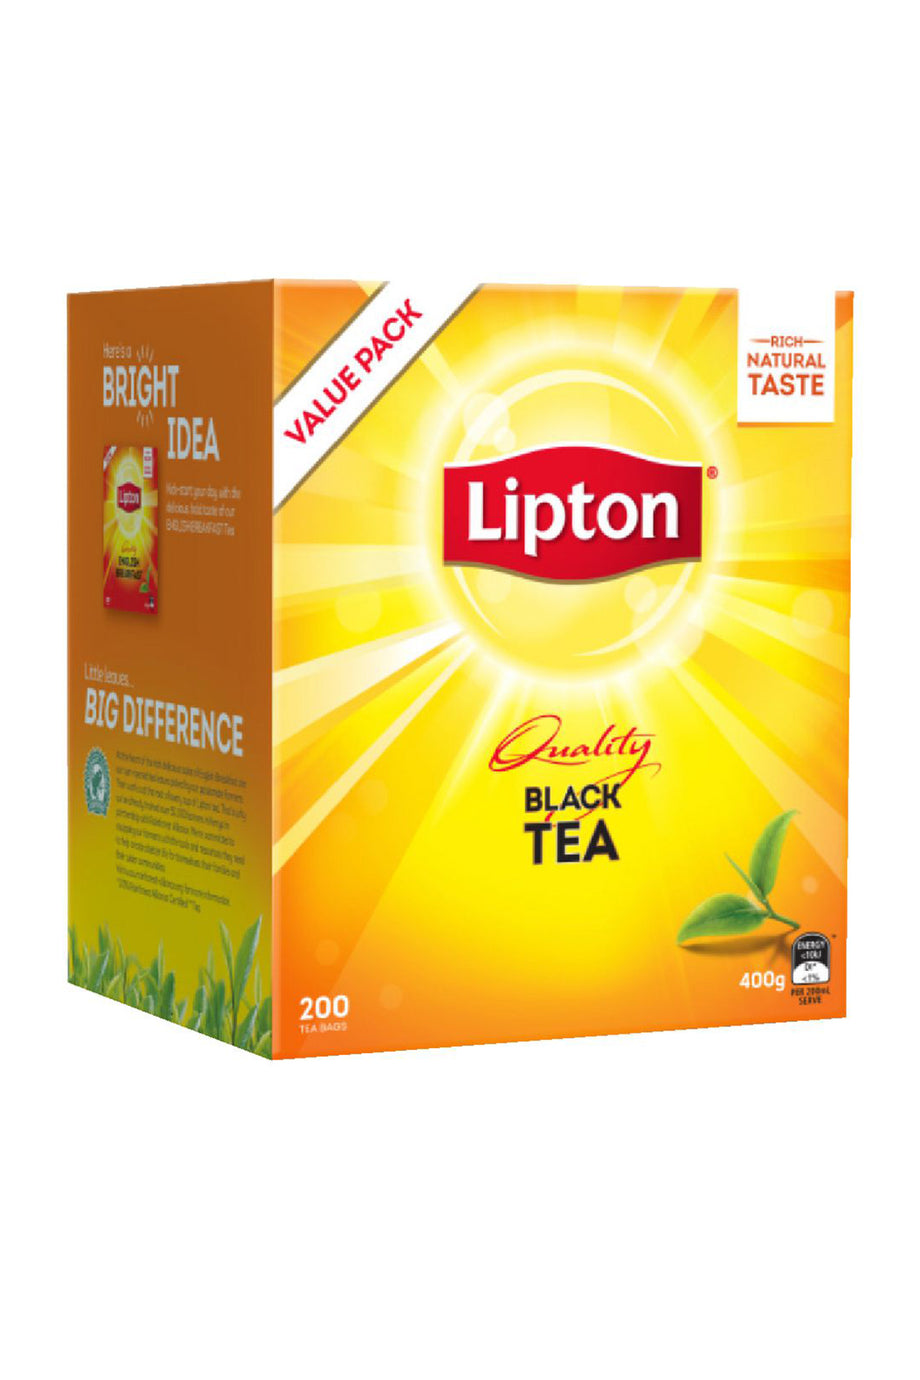 Lipton Tea Images – Browse 1,343 Stock Photos, Vectors, and Video | Adobe  Stock